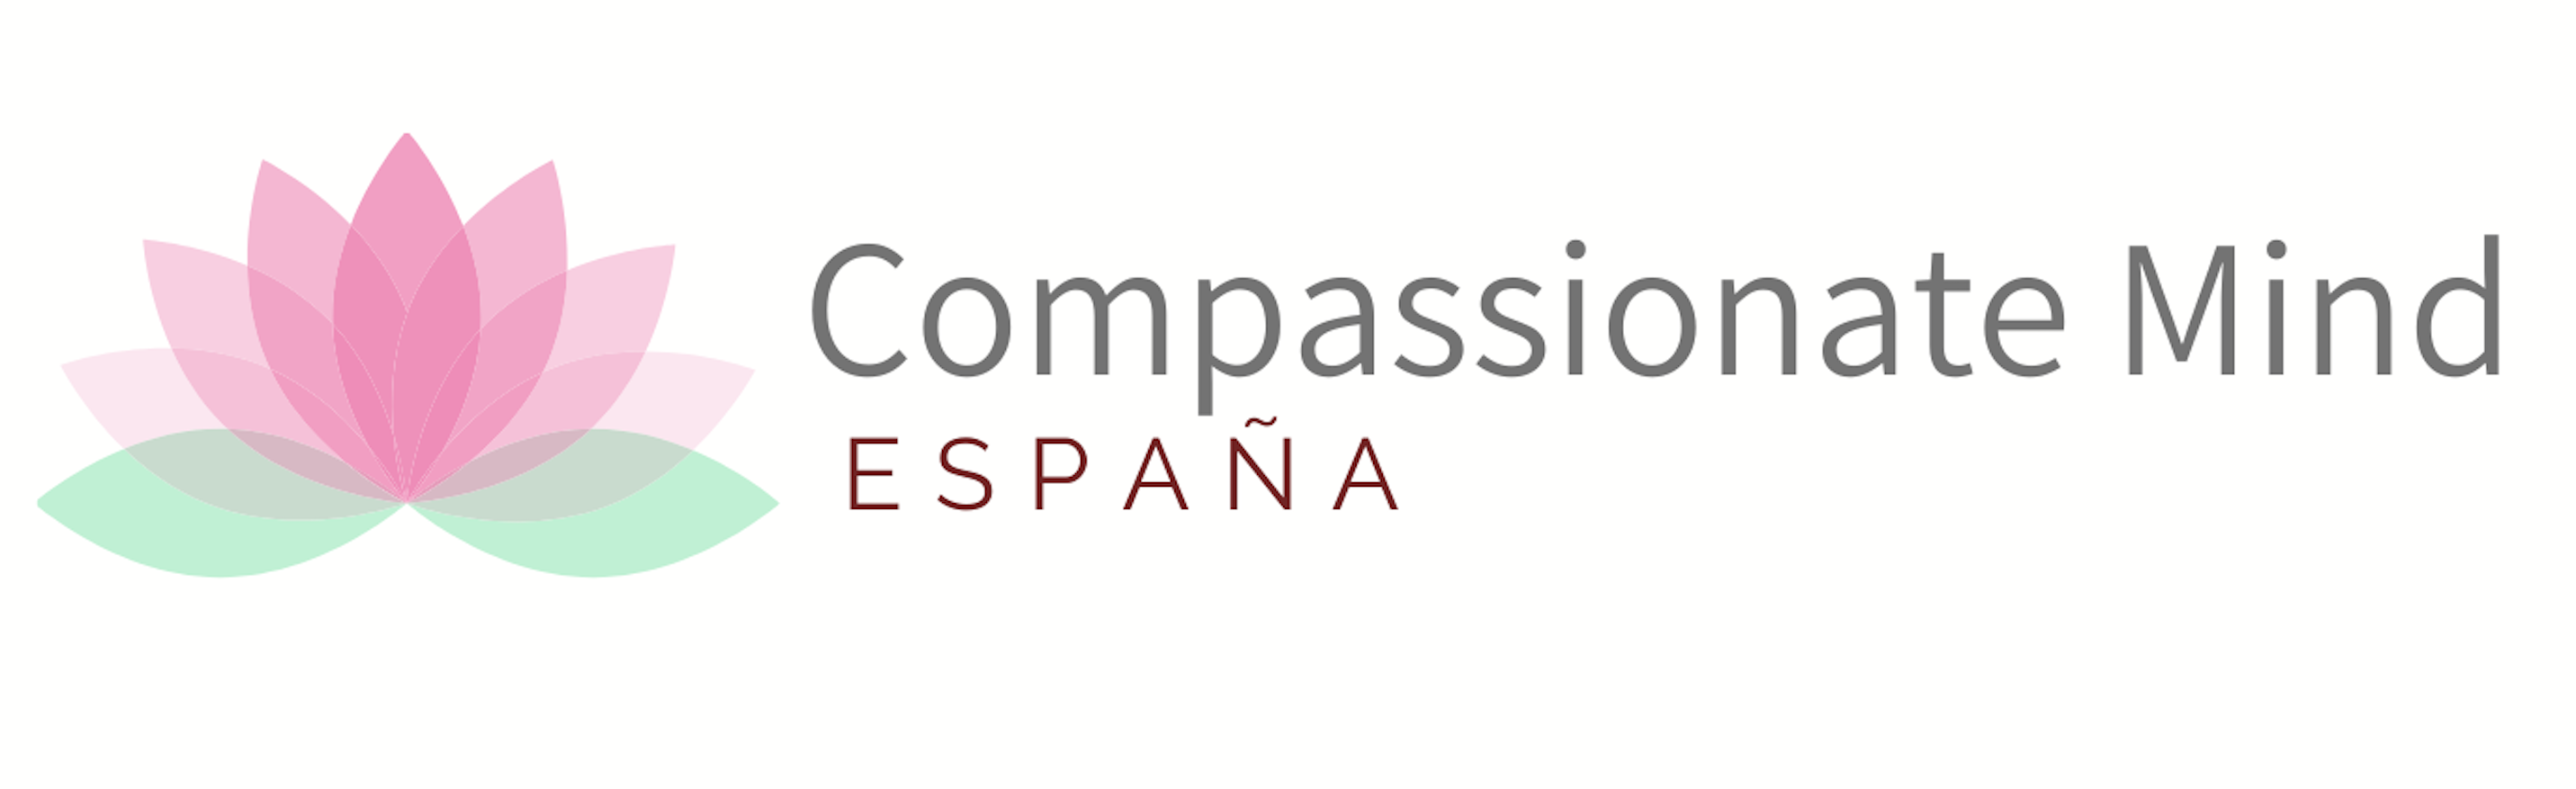 Compassionate Mind España